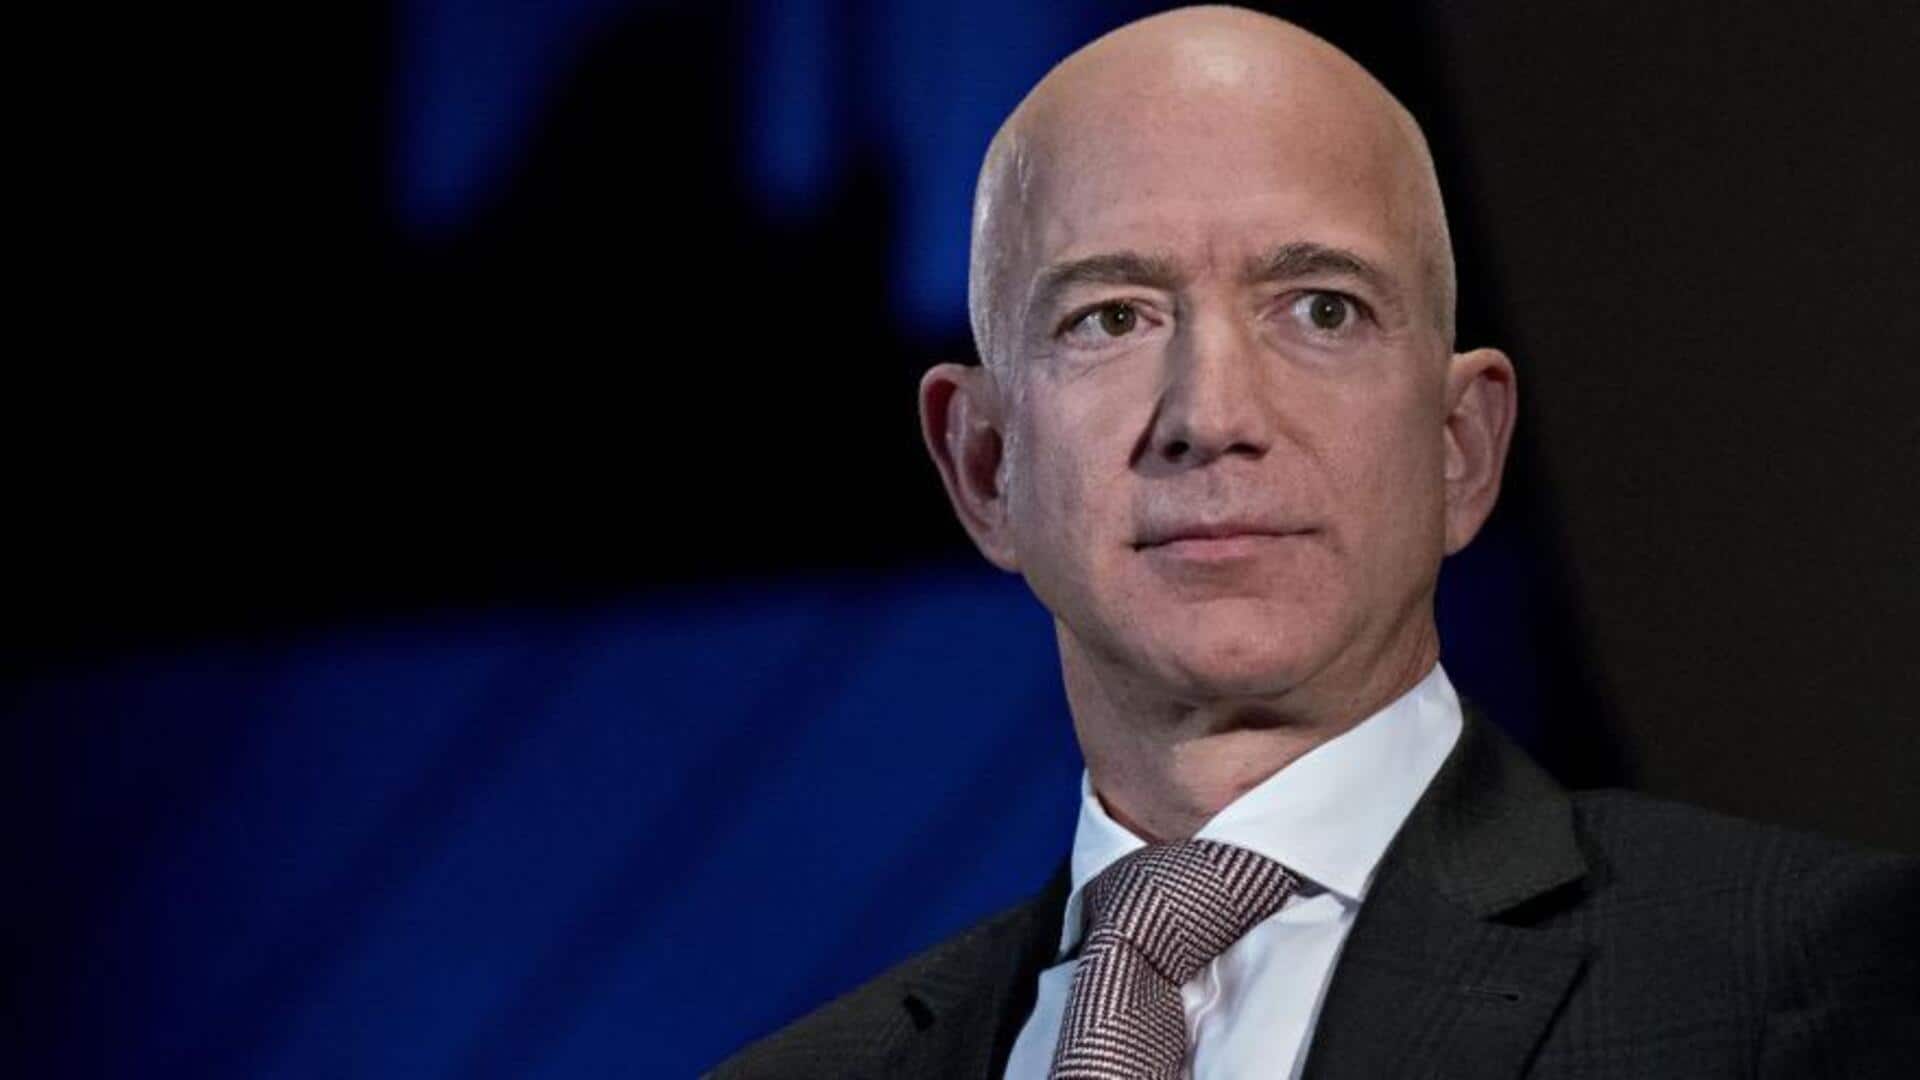 Bezos sells $4B worth of Amazon stock in 4 days